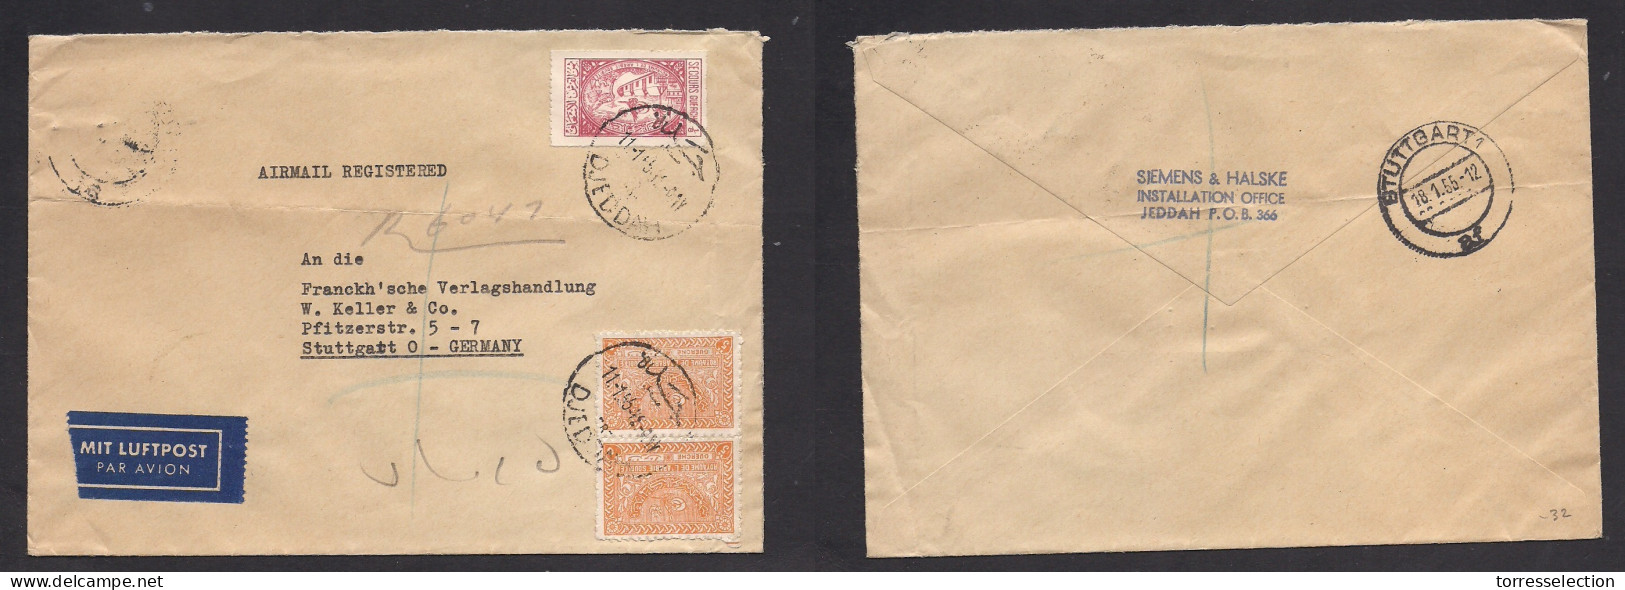 SAUDI ARABIA. 1955 (11 Jan) Djeddah - Stuttgart, Germany (18 Jan) Airmail Registered Multifkd Env. Fine. XSALE. - Arabia Saudita